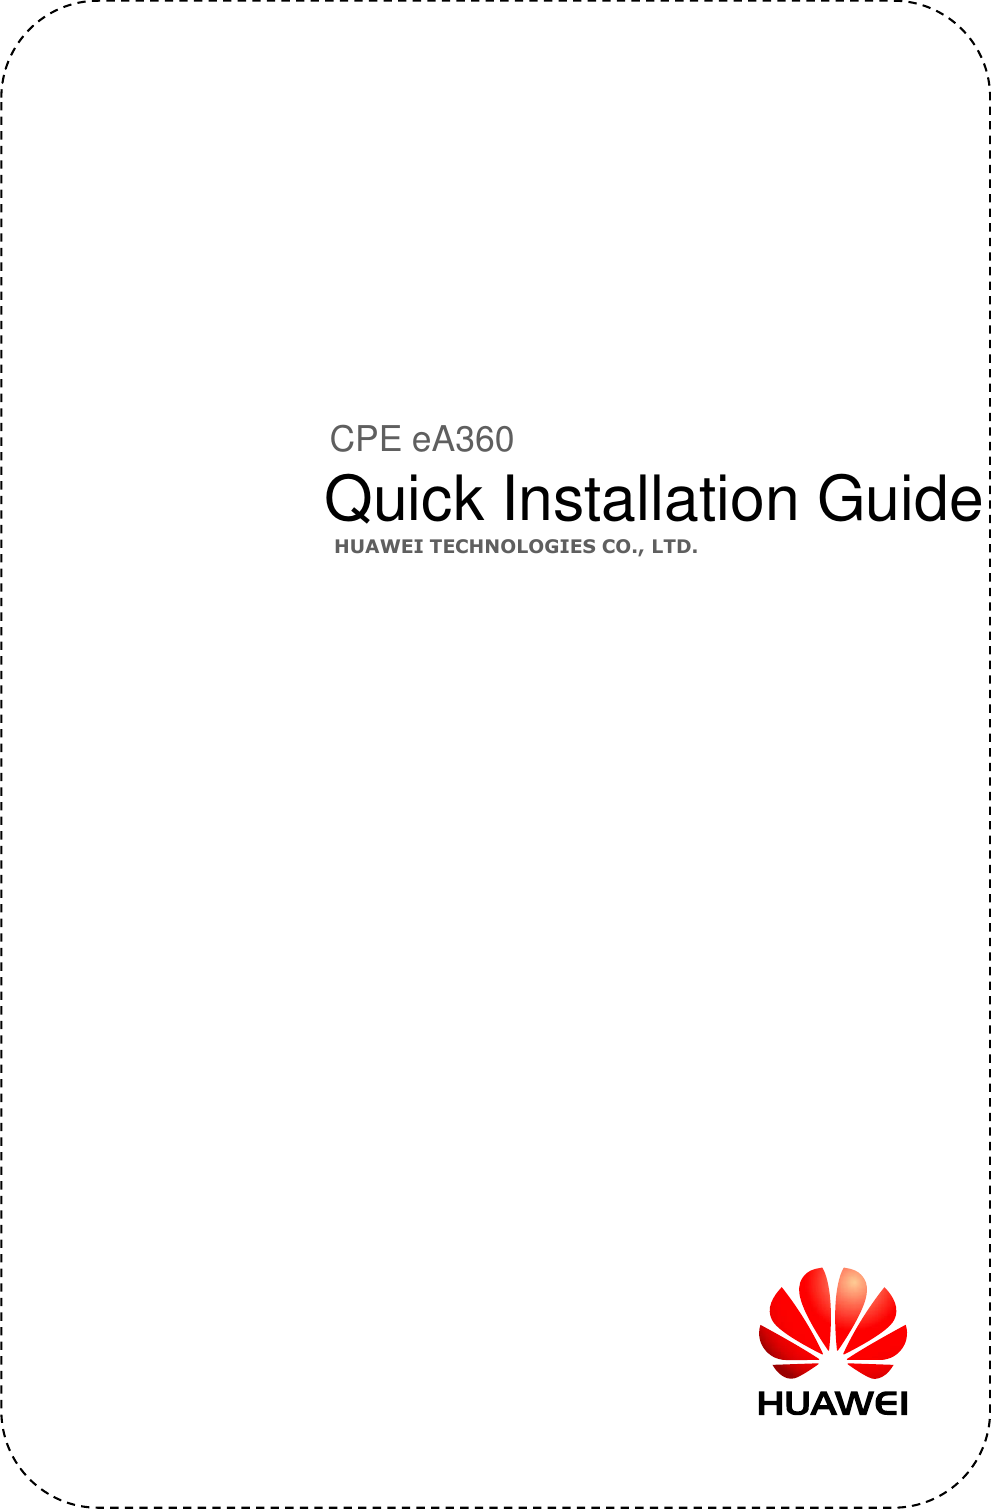 CPE eA360 HUAWEI TECHNOLOGIES CO., LTD. Quick Installation Guide 